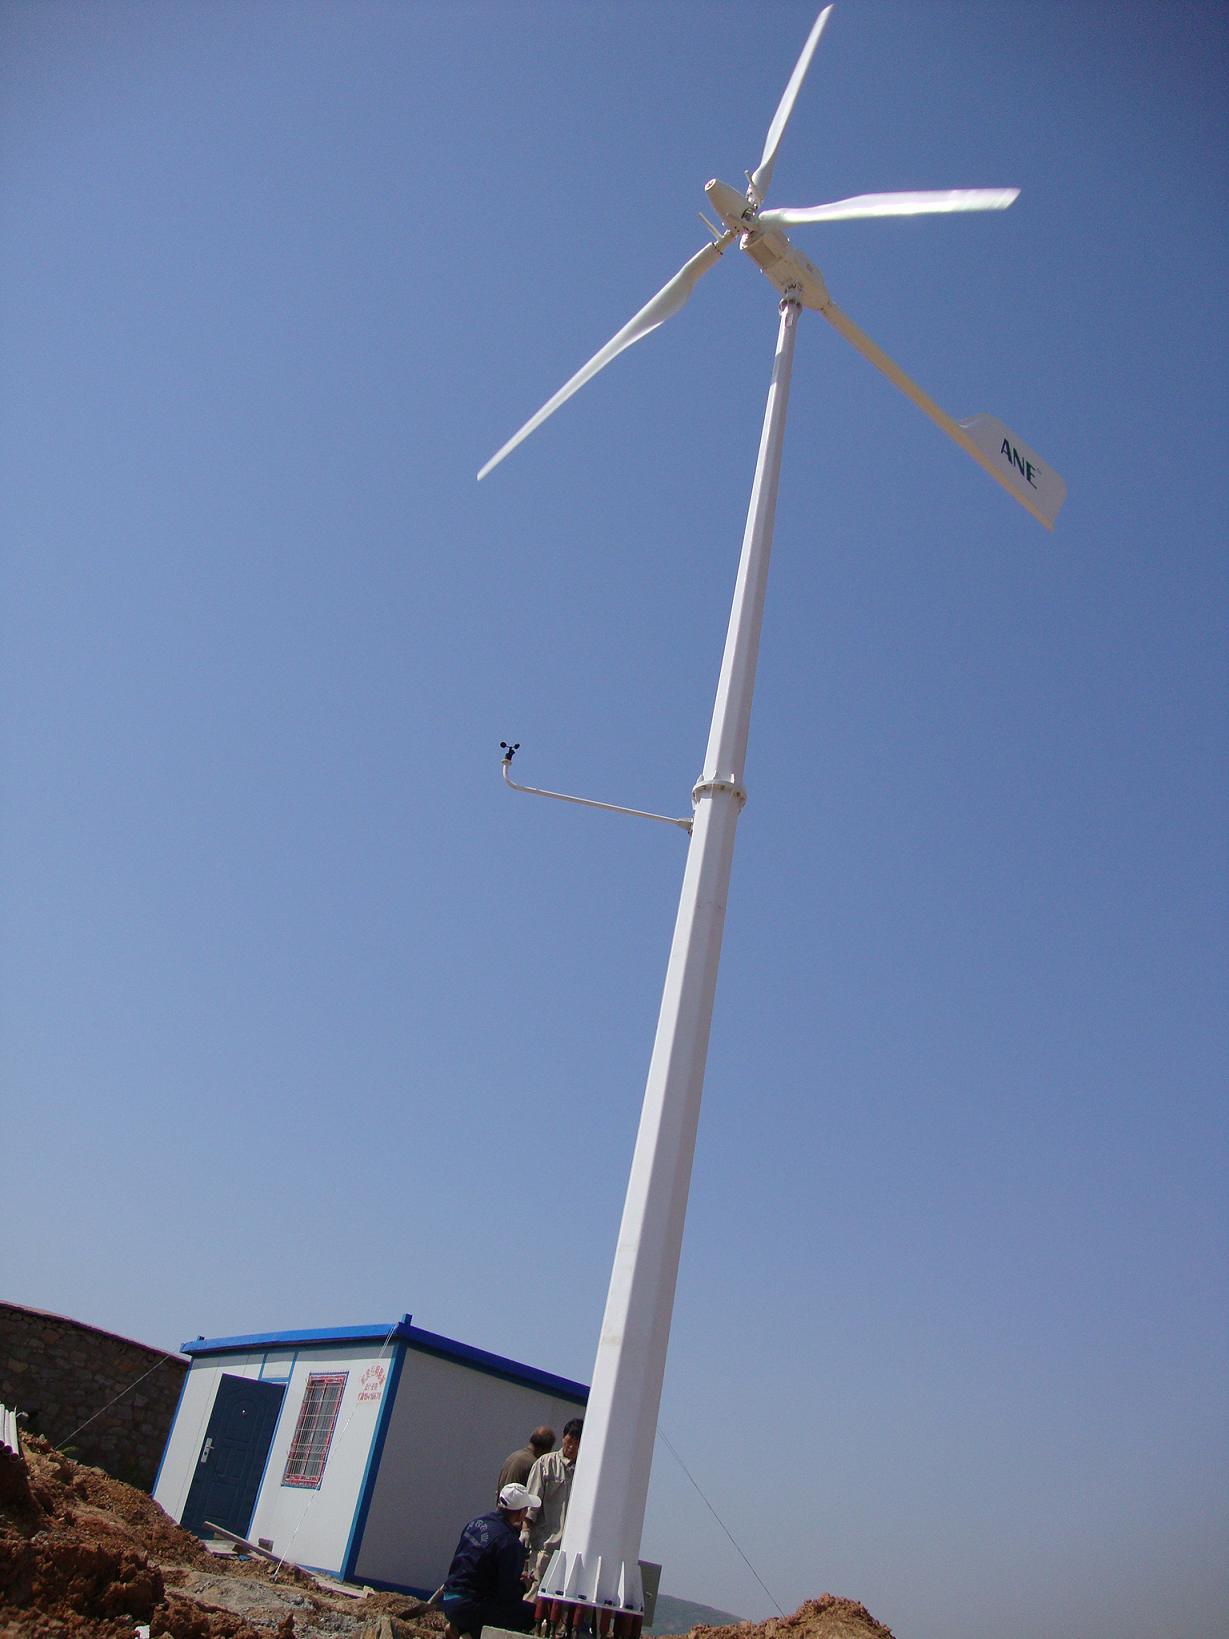 5kw Wind Generator Turbine for Home or Farm Use